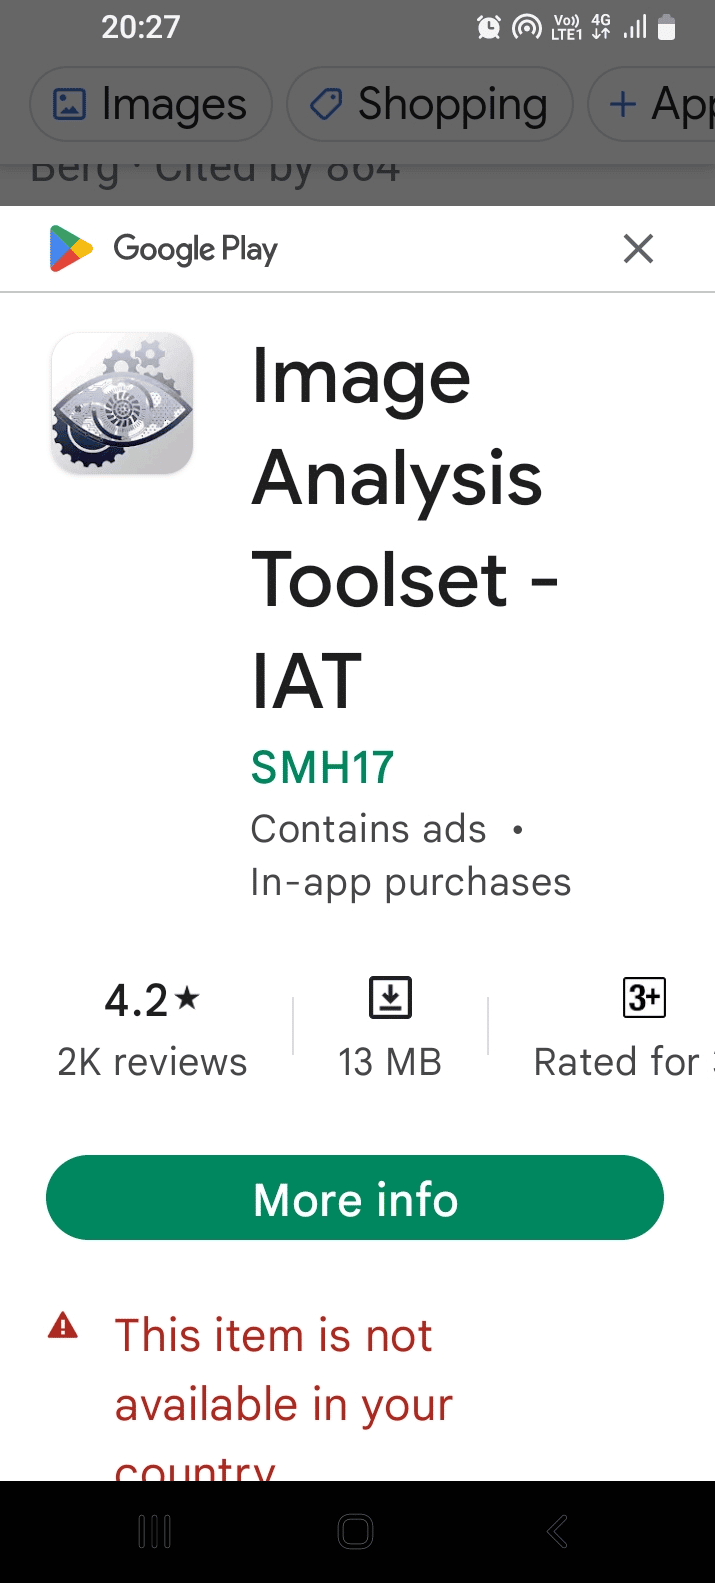 Image Analysis Toolset - IAT